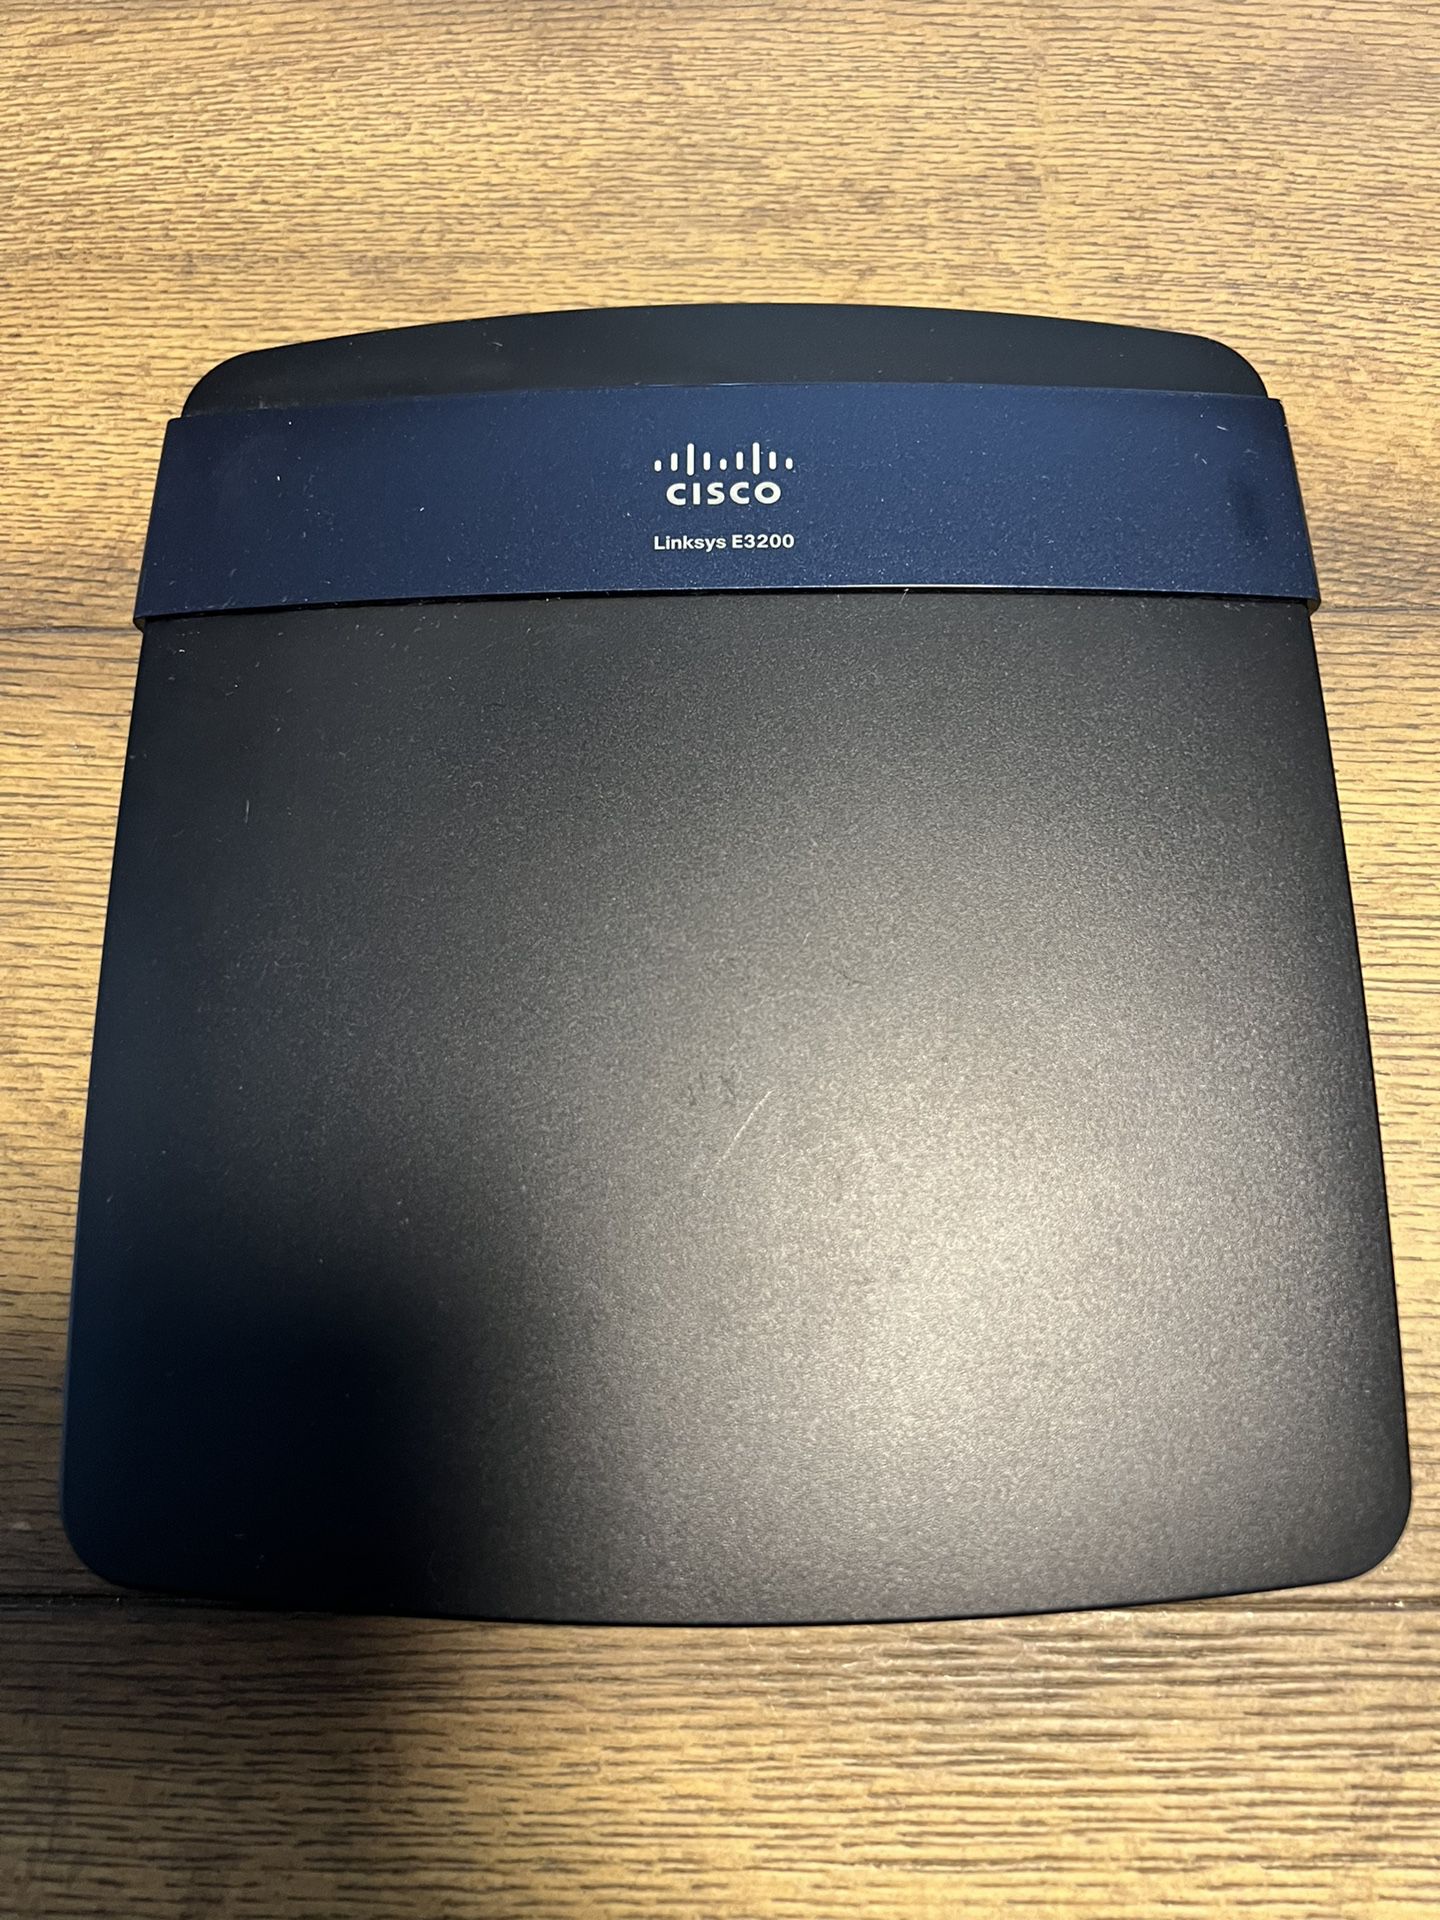 Cisco Linksys E3200 Wireless Router